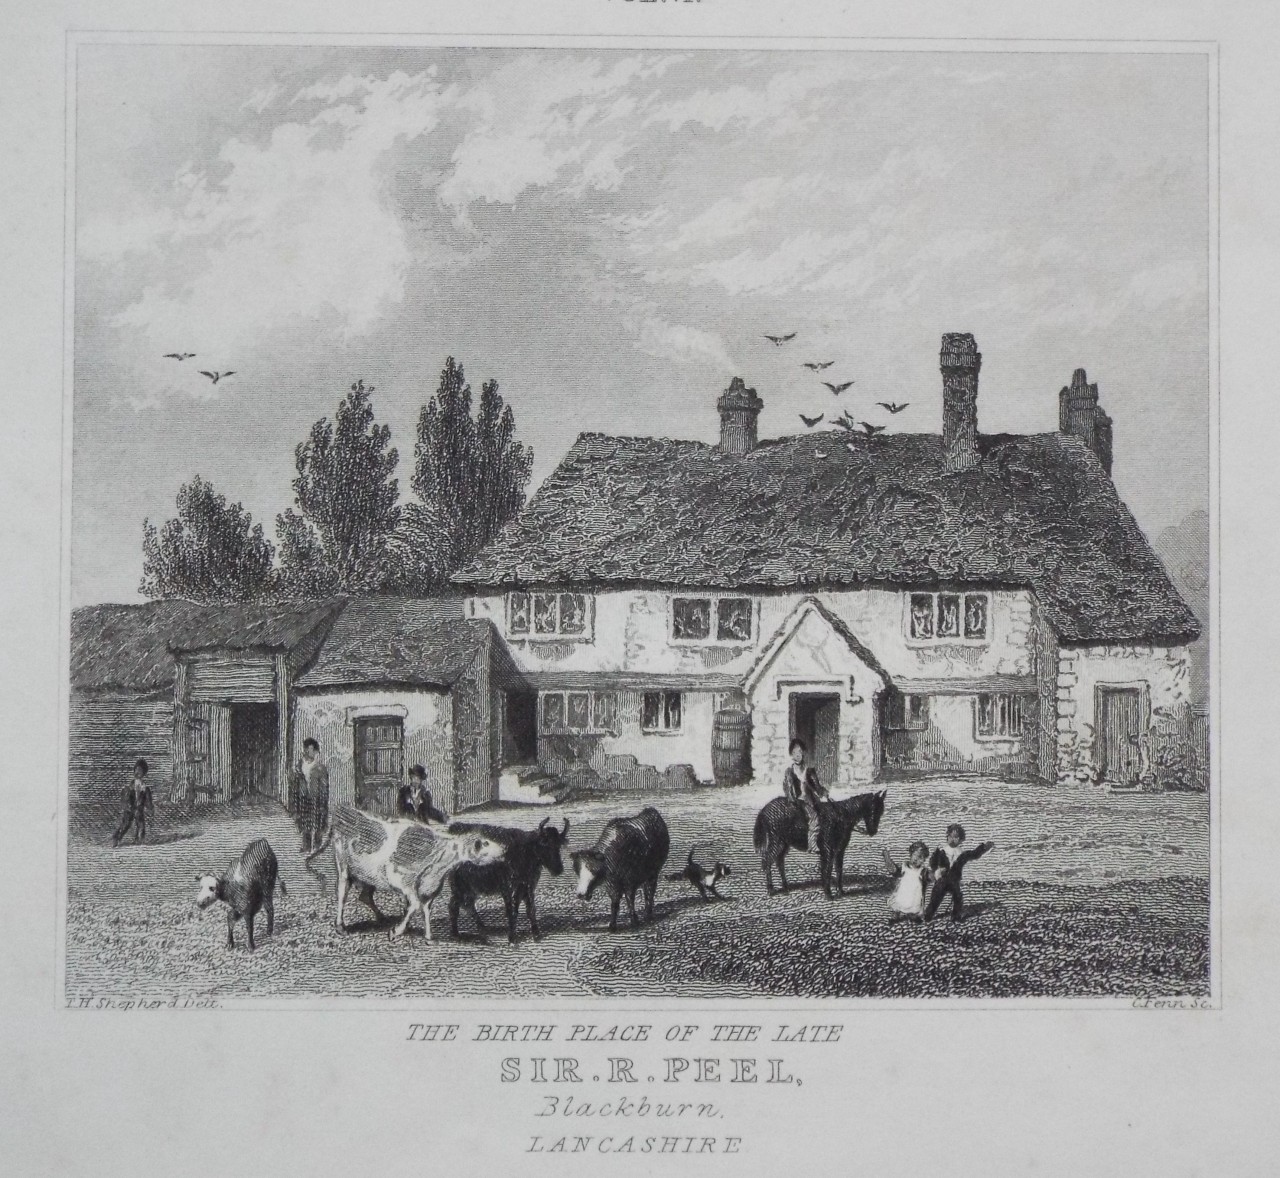 Print - The Birth Place of the Late Sir. R. Peel, Blackburn, Lancashire.